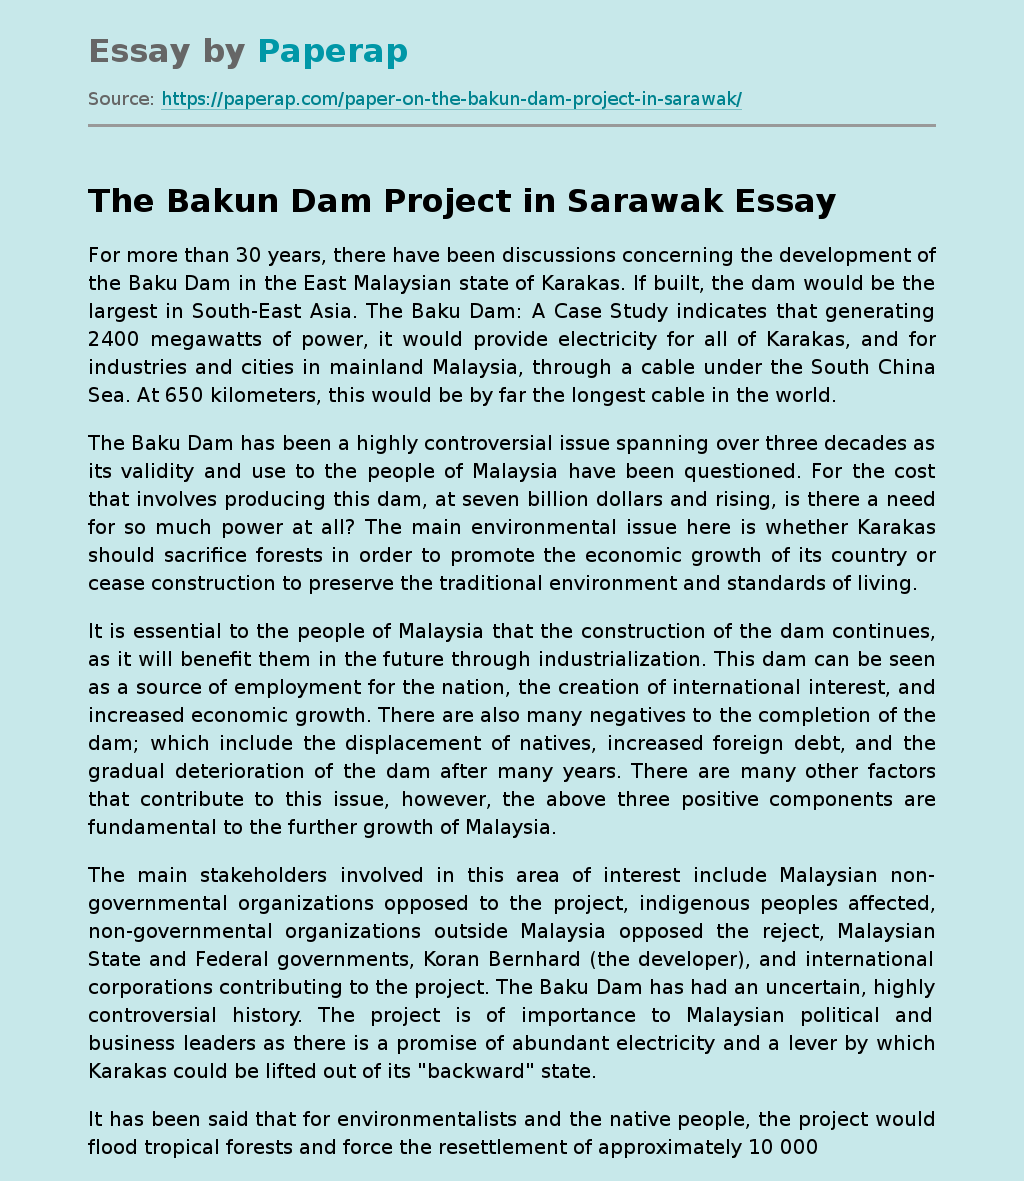 The Bakun Dam Project in Sarawak